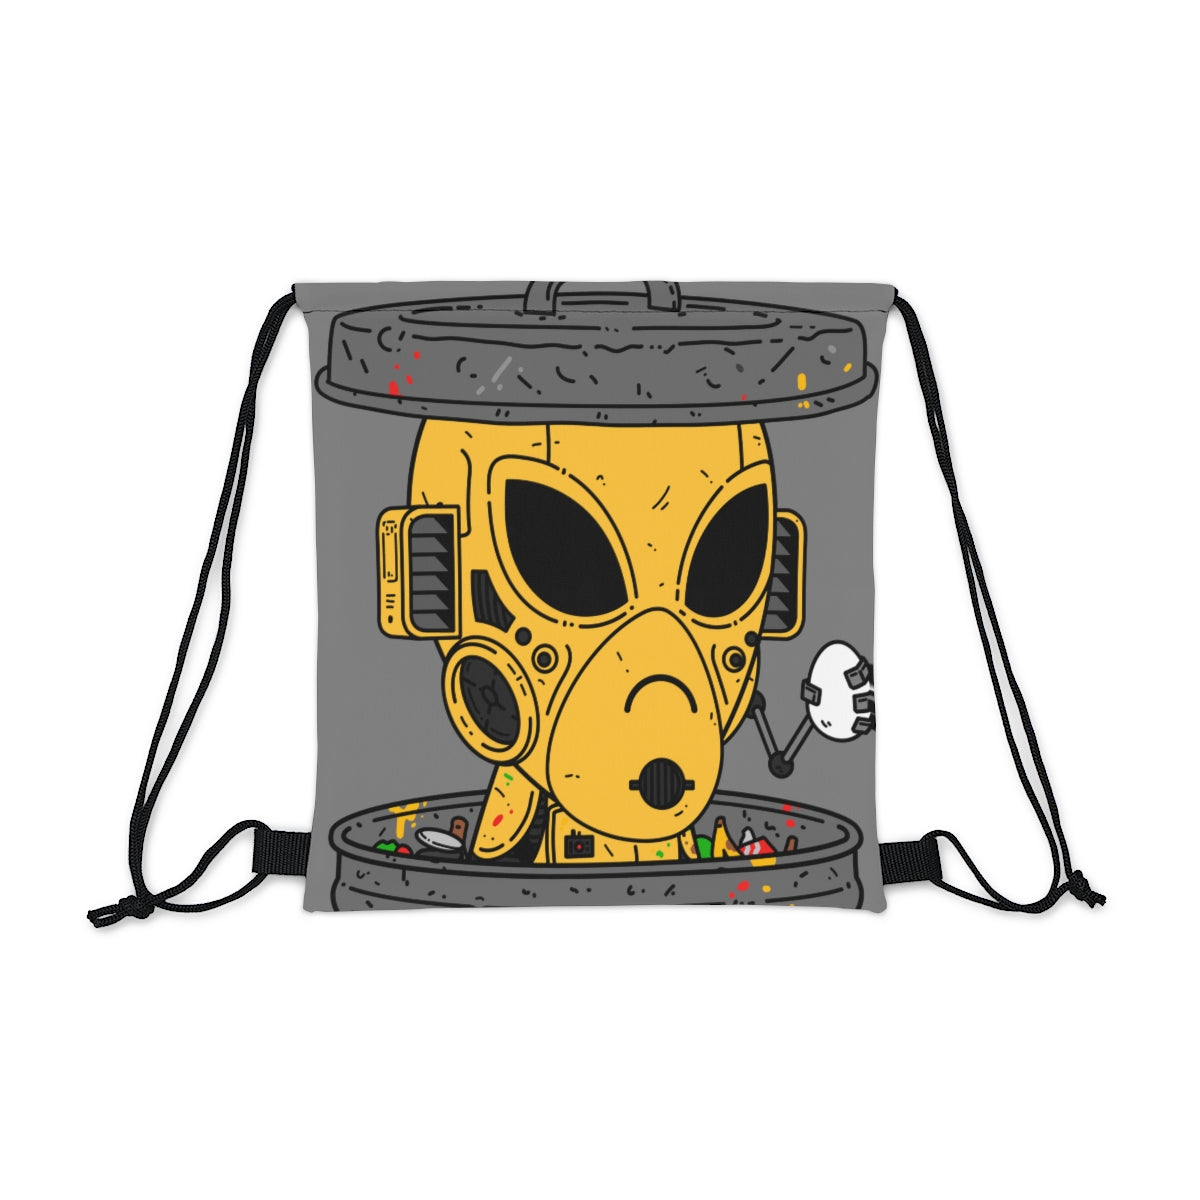 Trash can Art Egg Armored Yellow Future Alien Cyborg Machine Visitor Outdoor Drawstring Bag